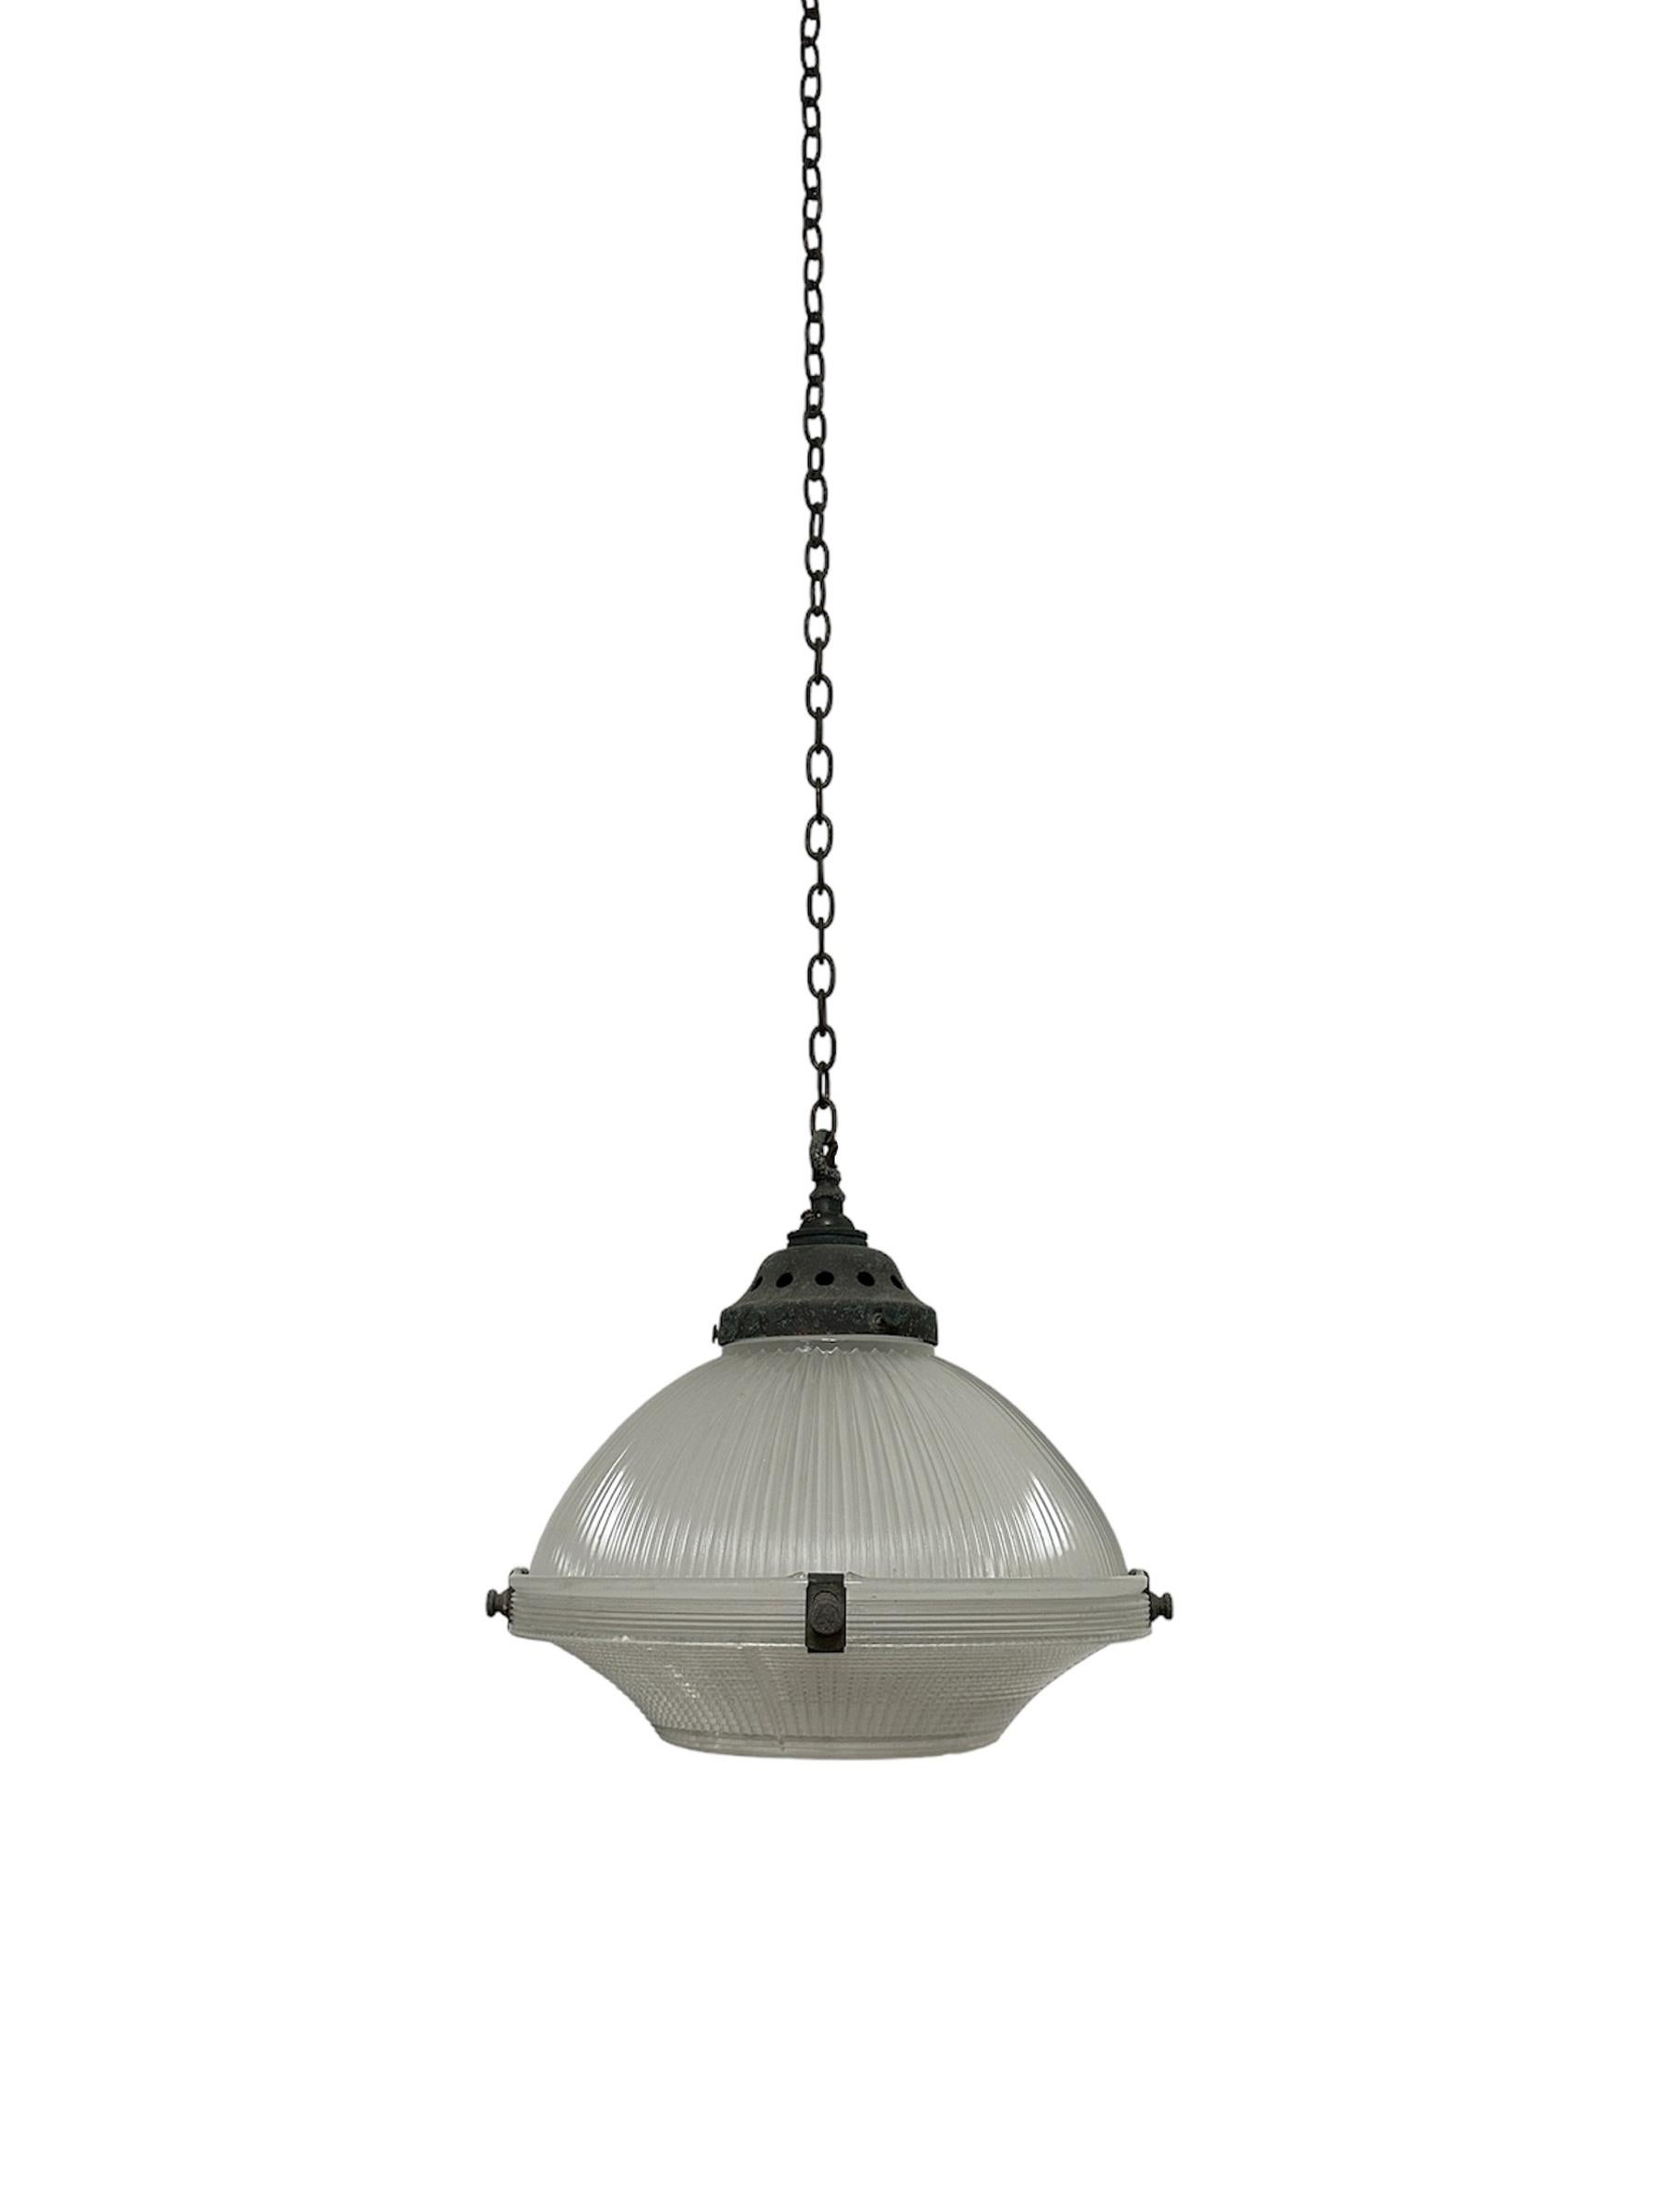 British Antique Vintage Industrial Church Holophane Prismatic Glass Ceiling Pendant Lamp For Sale